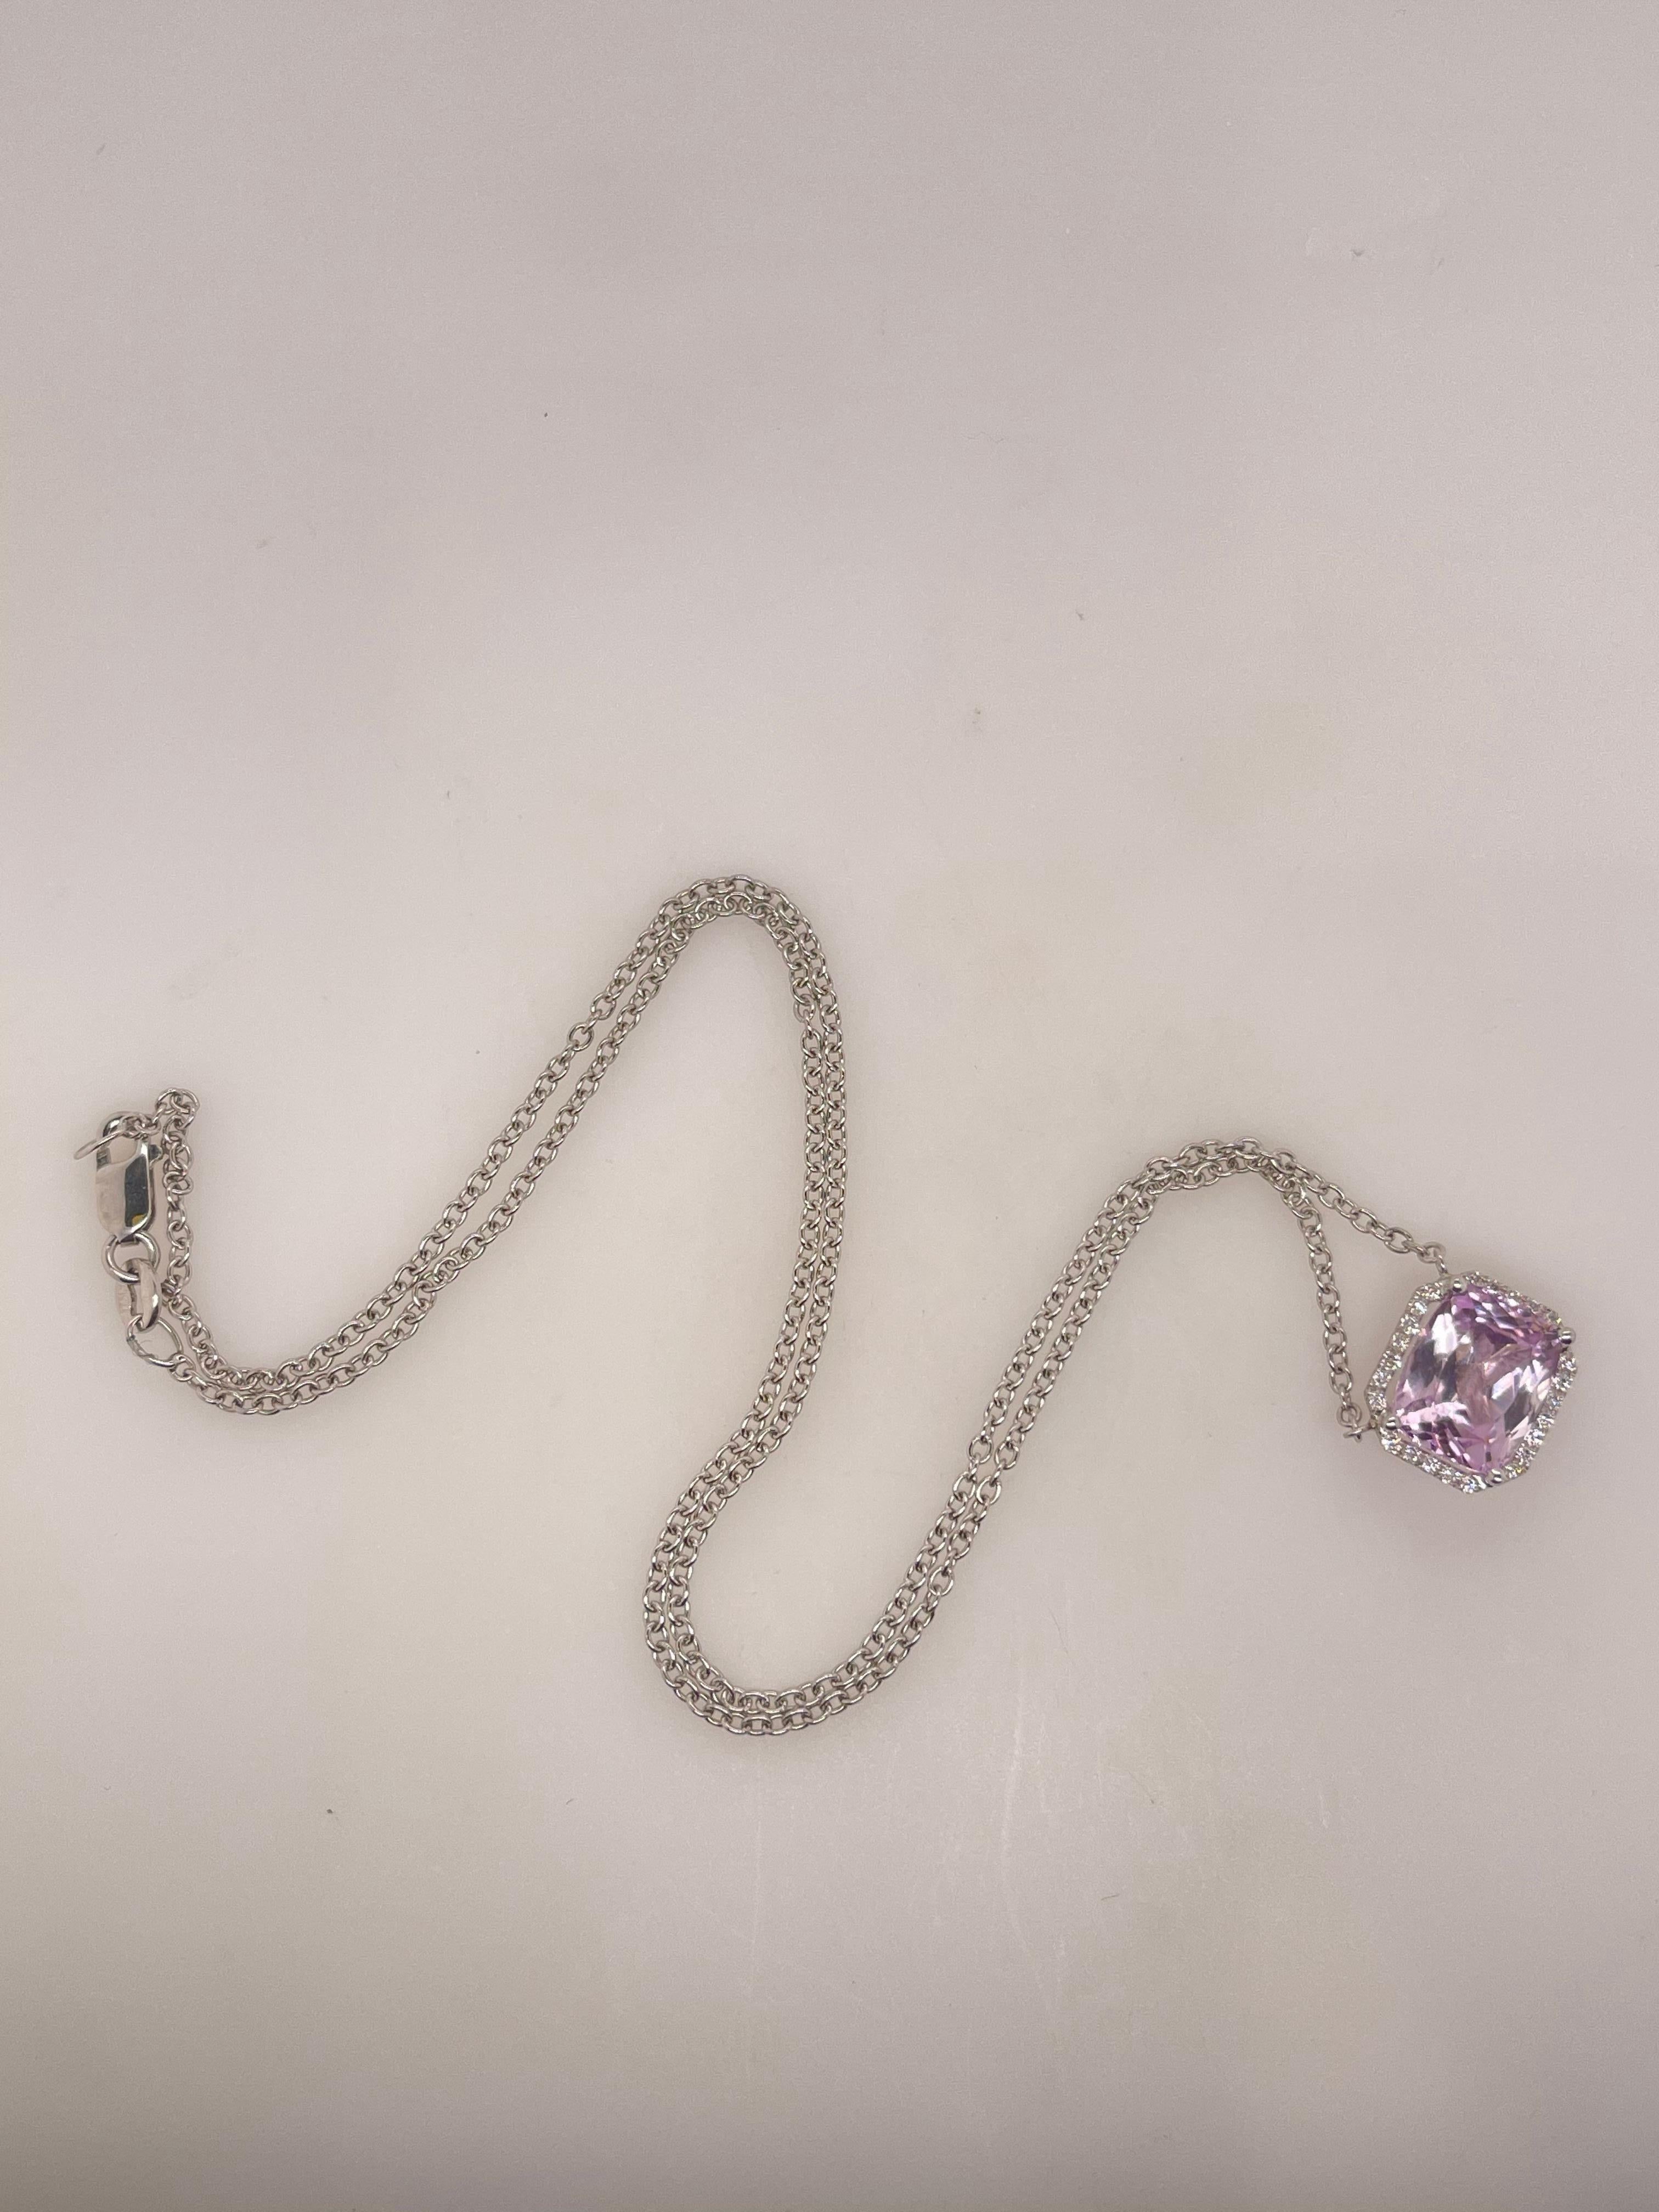 Kunzite & Diamond Necklace 
14kt White Gold 
1 Kunzite= 4.27ct 
30 Diamonds= 0.15ct
16